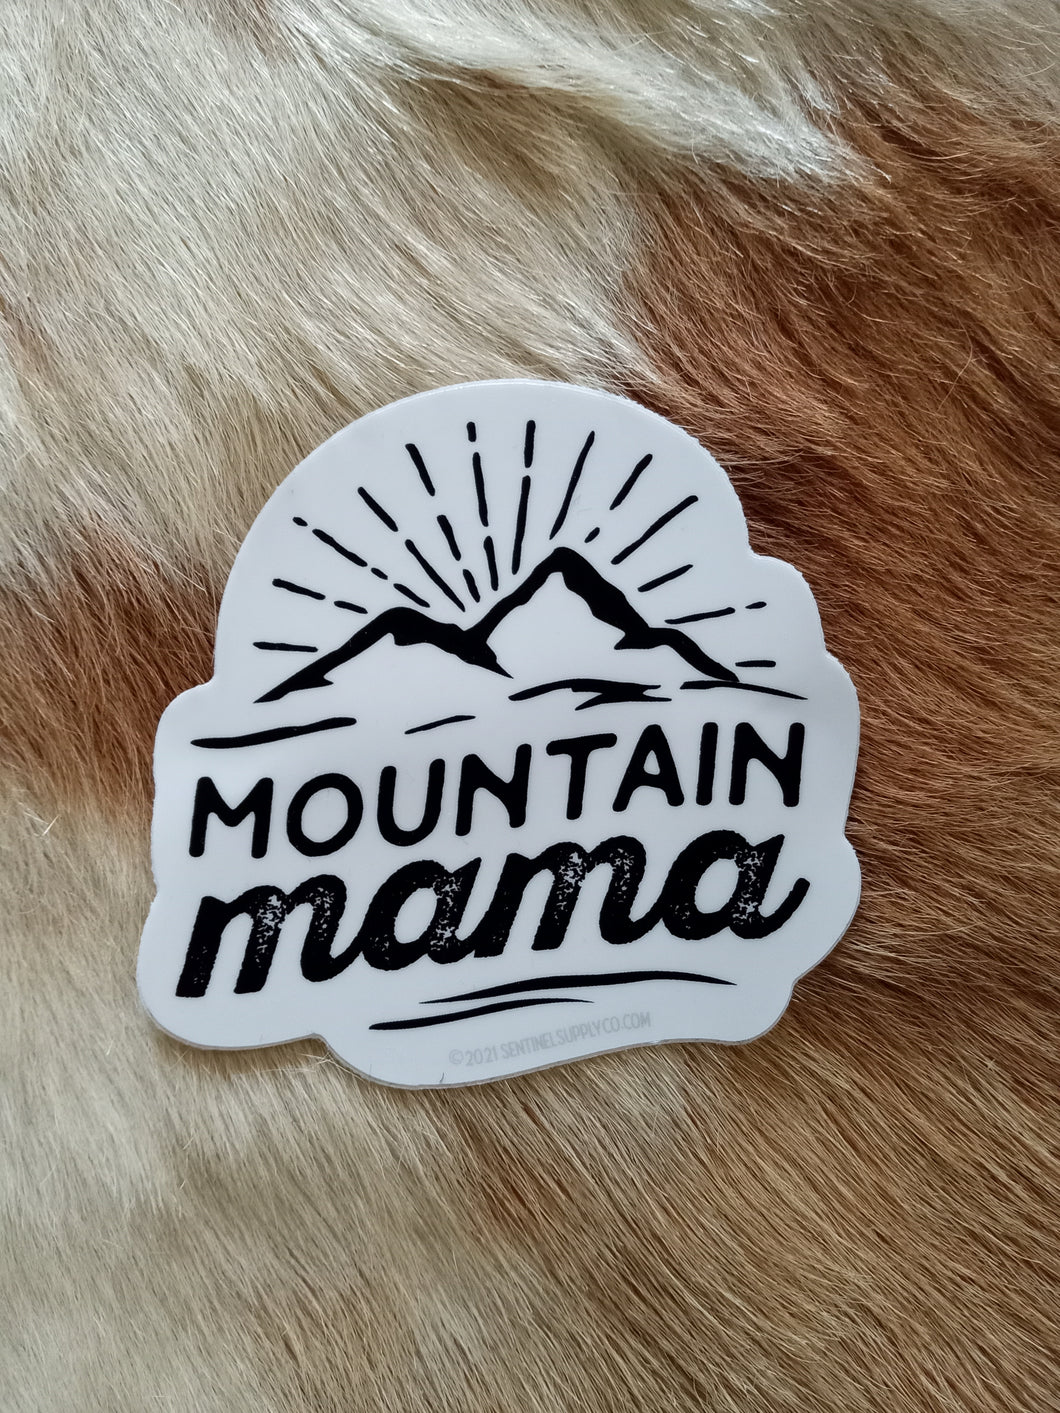 Mountain Mama Decal Sticker